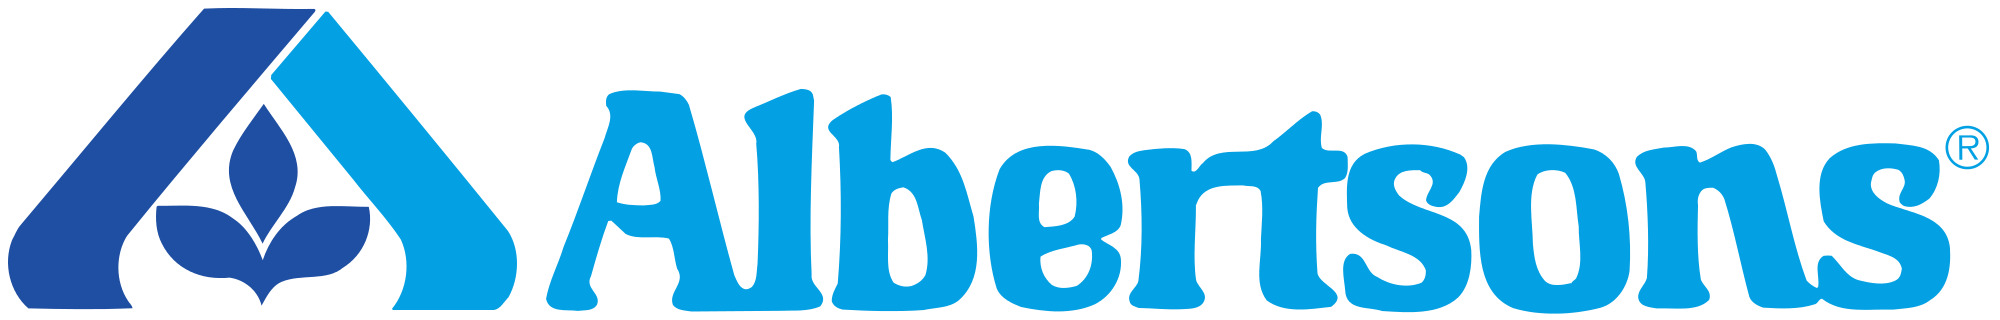 Albertsons Logo icons